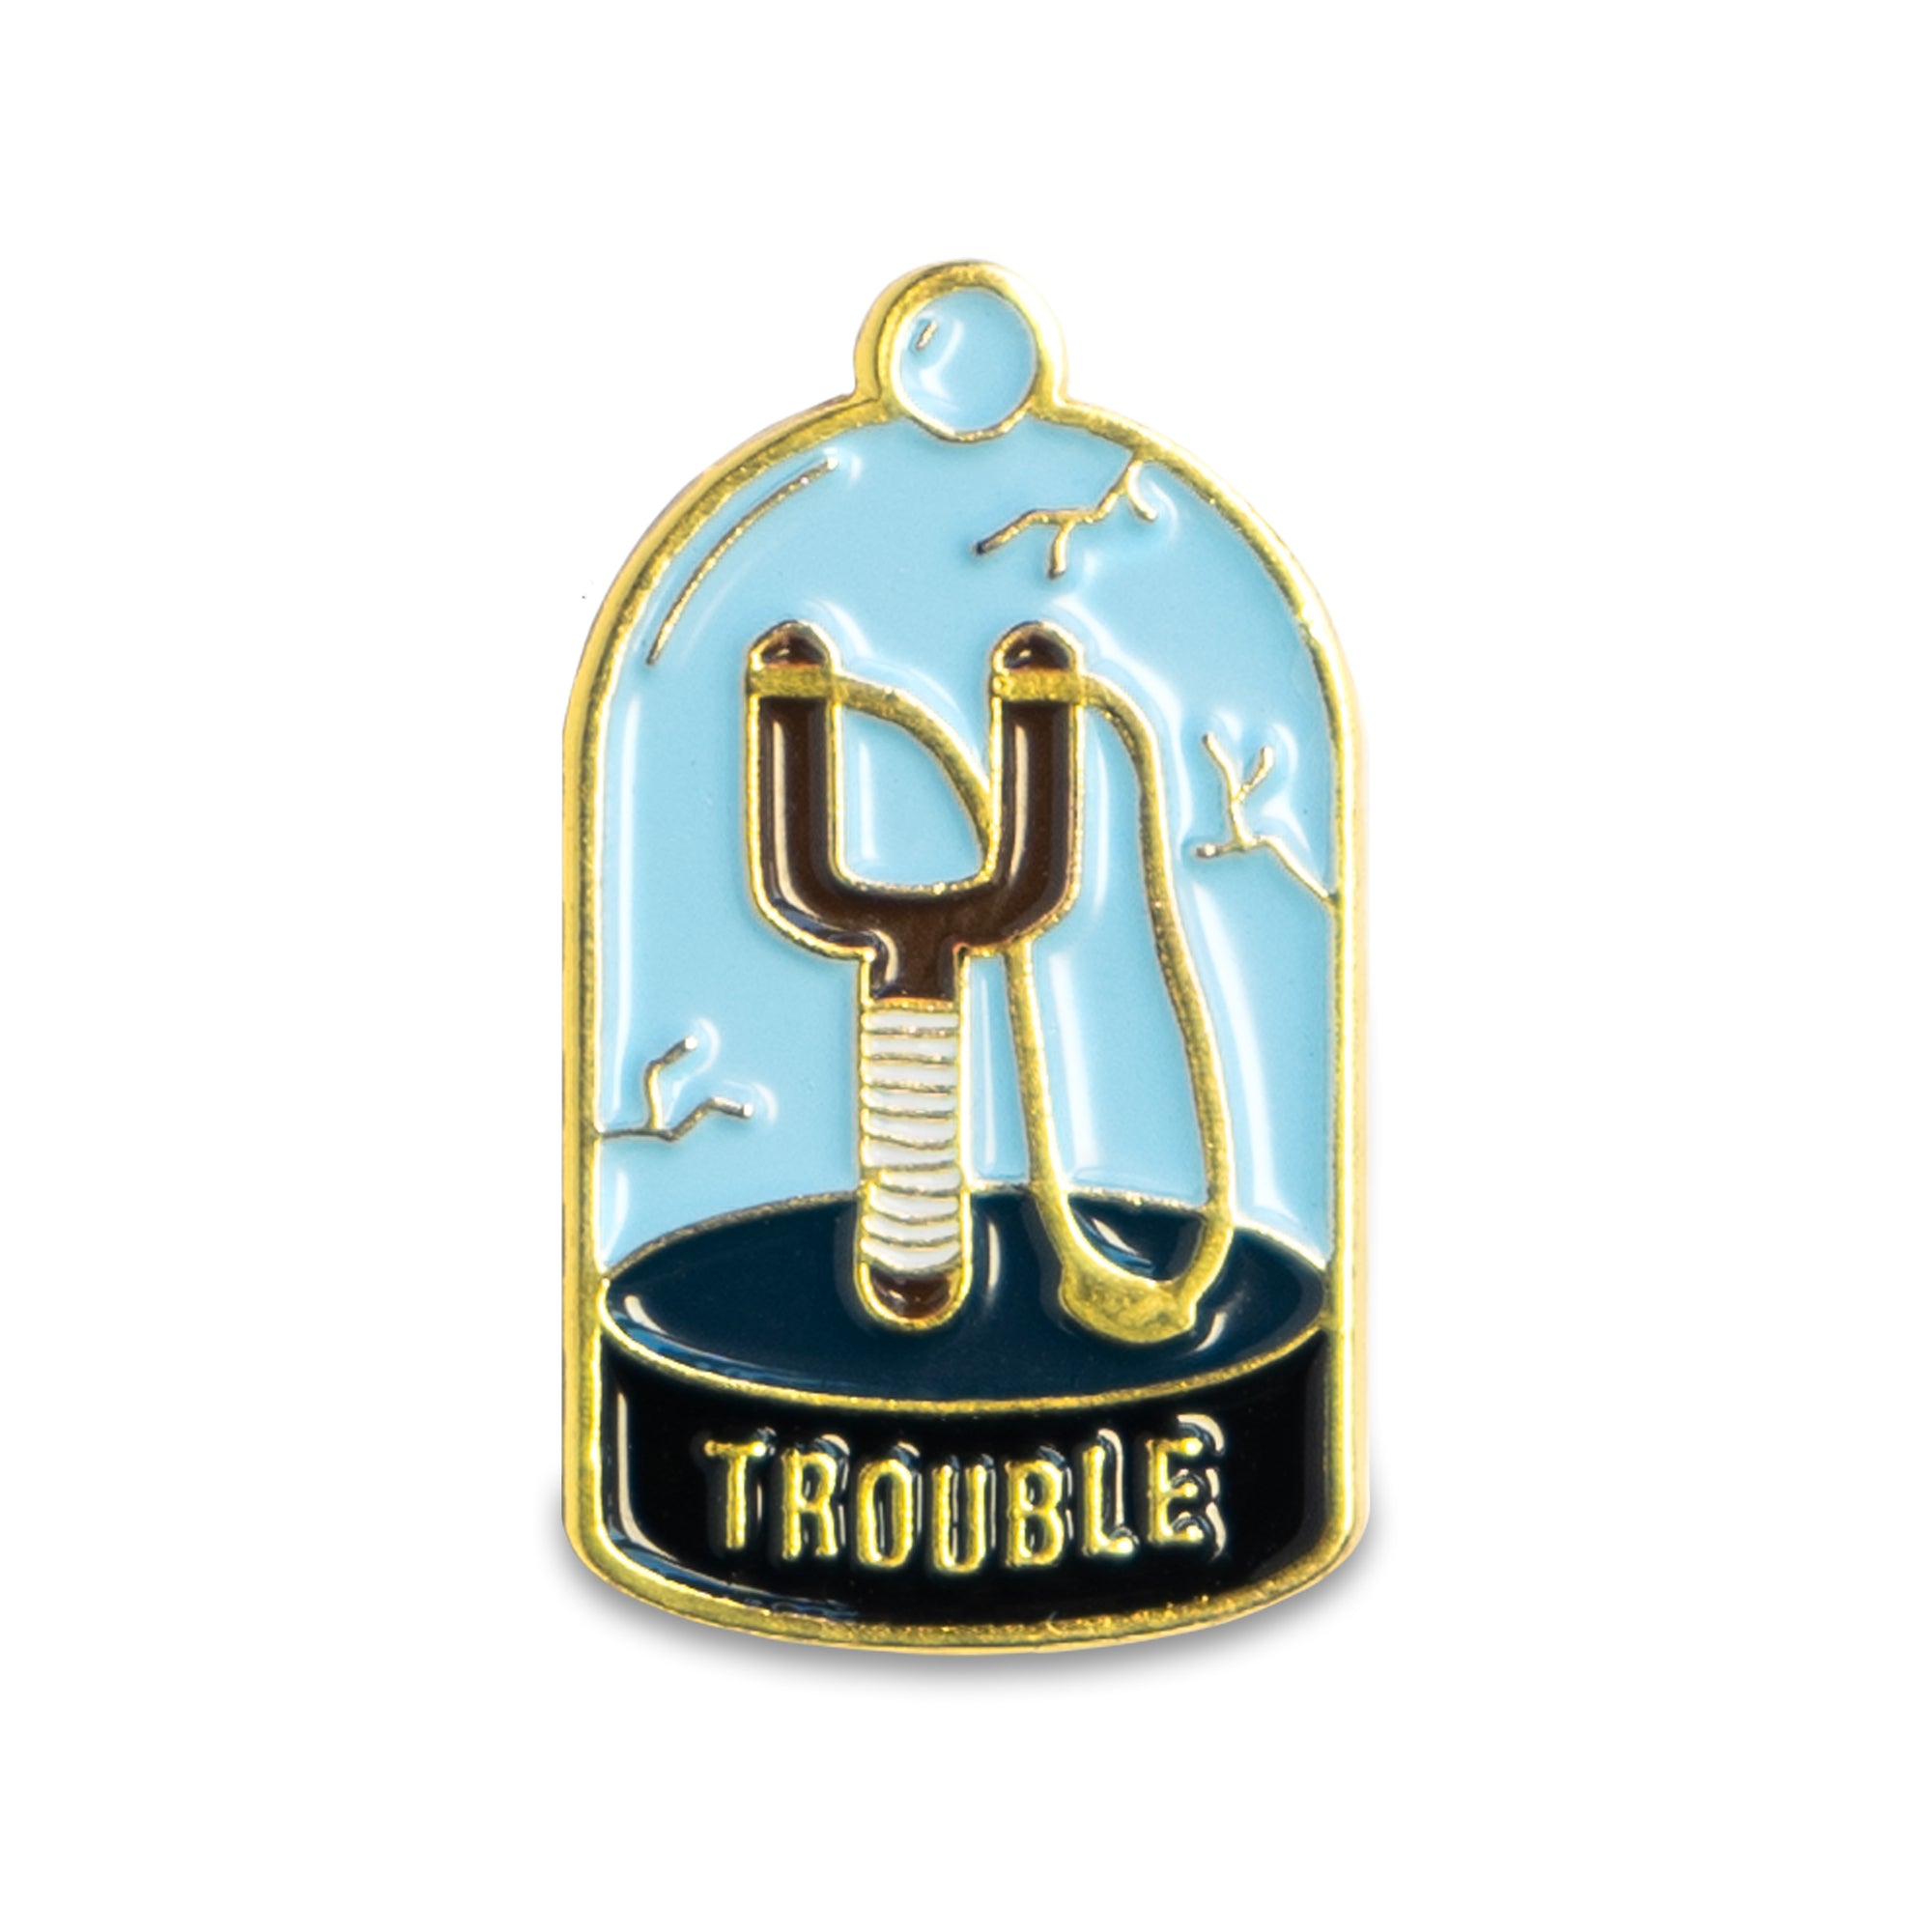 "Trouble" Lapel Pin